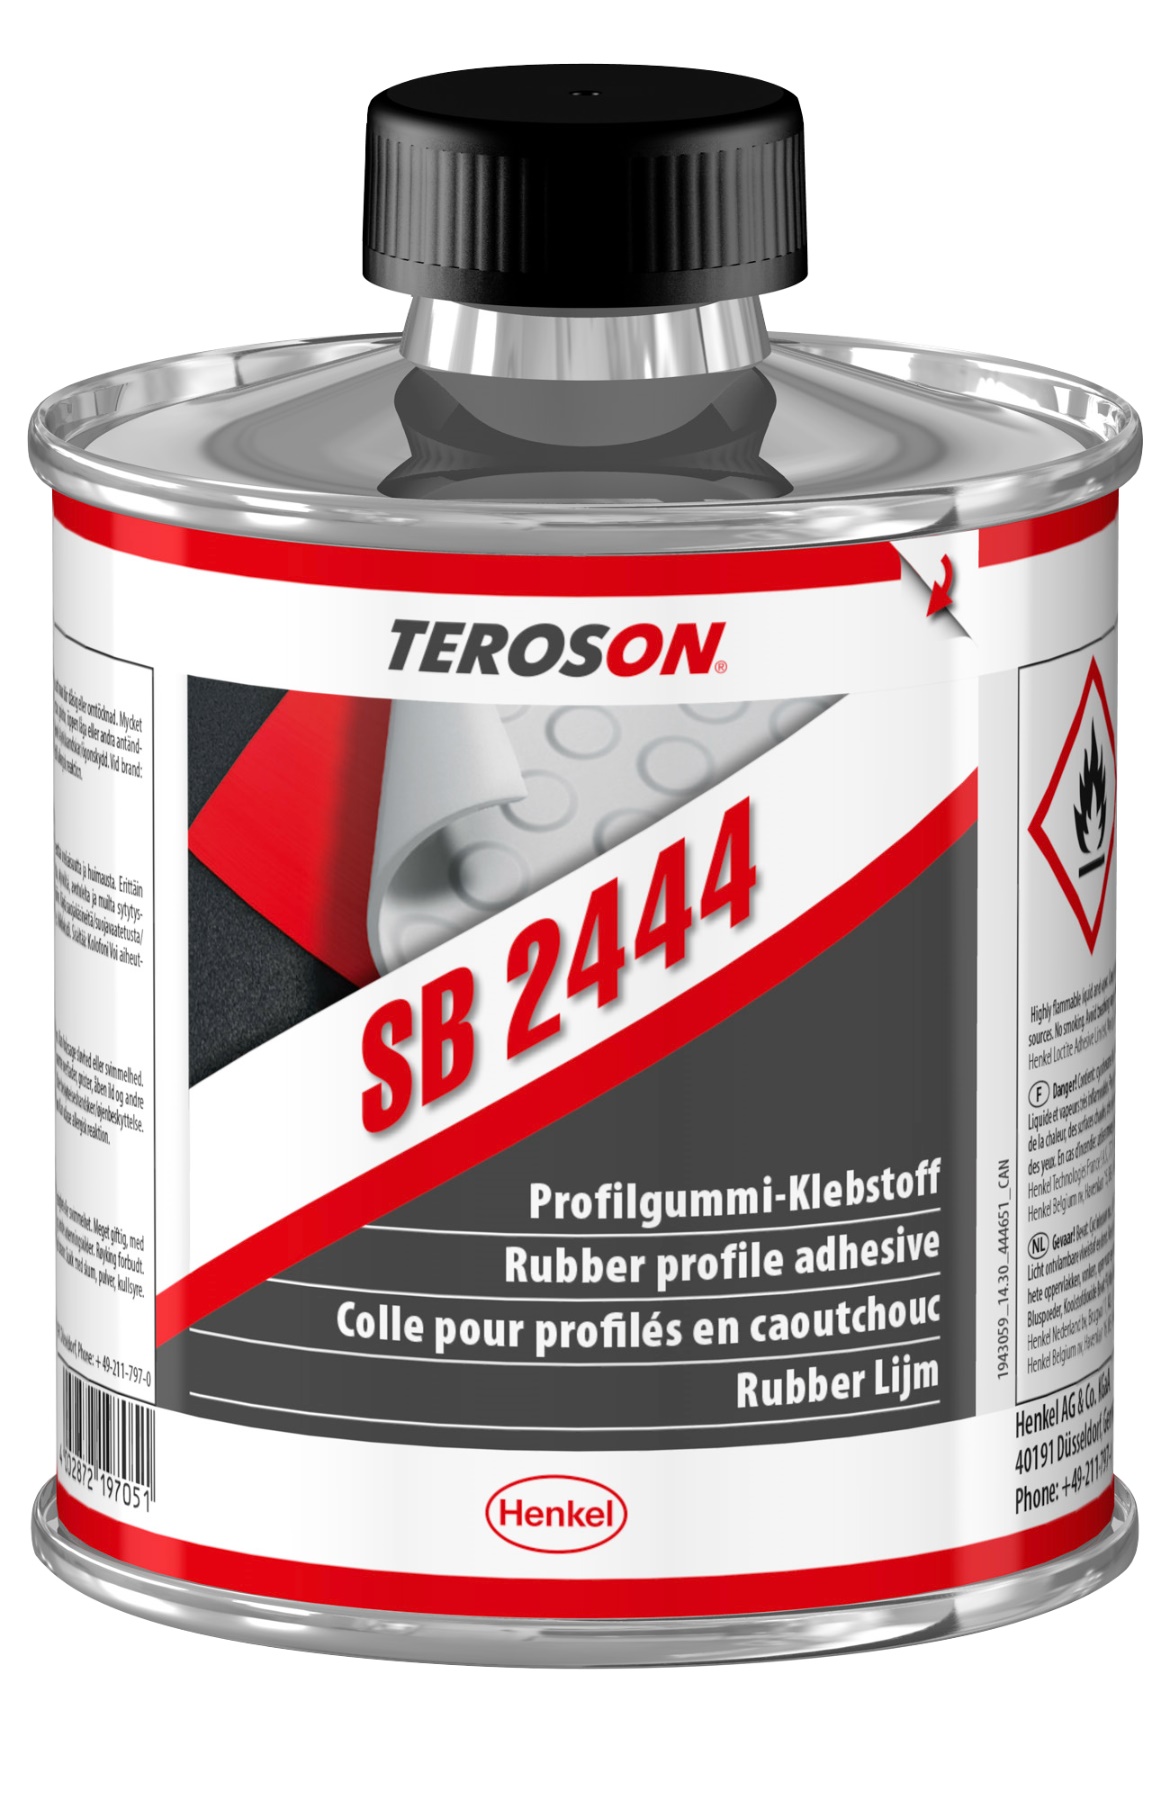 Teroson Klebstoff SB 2444